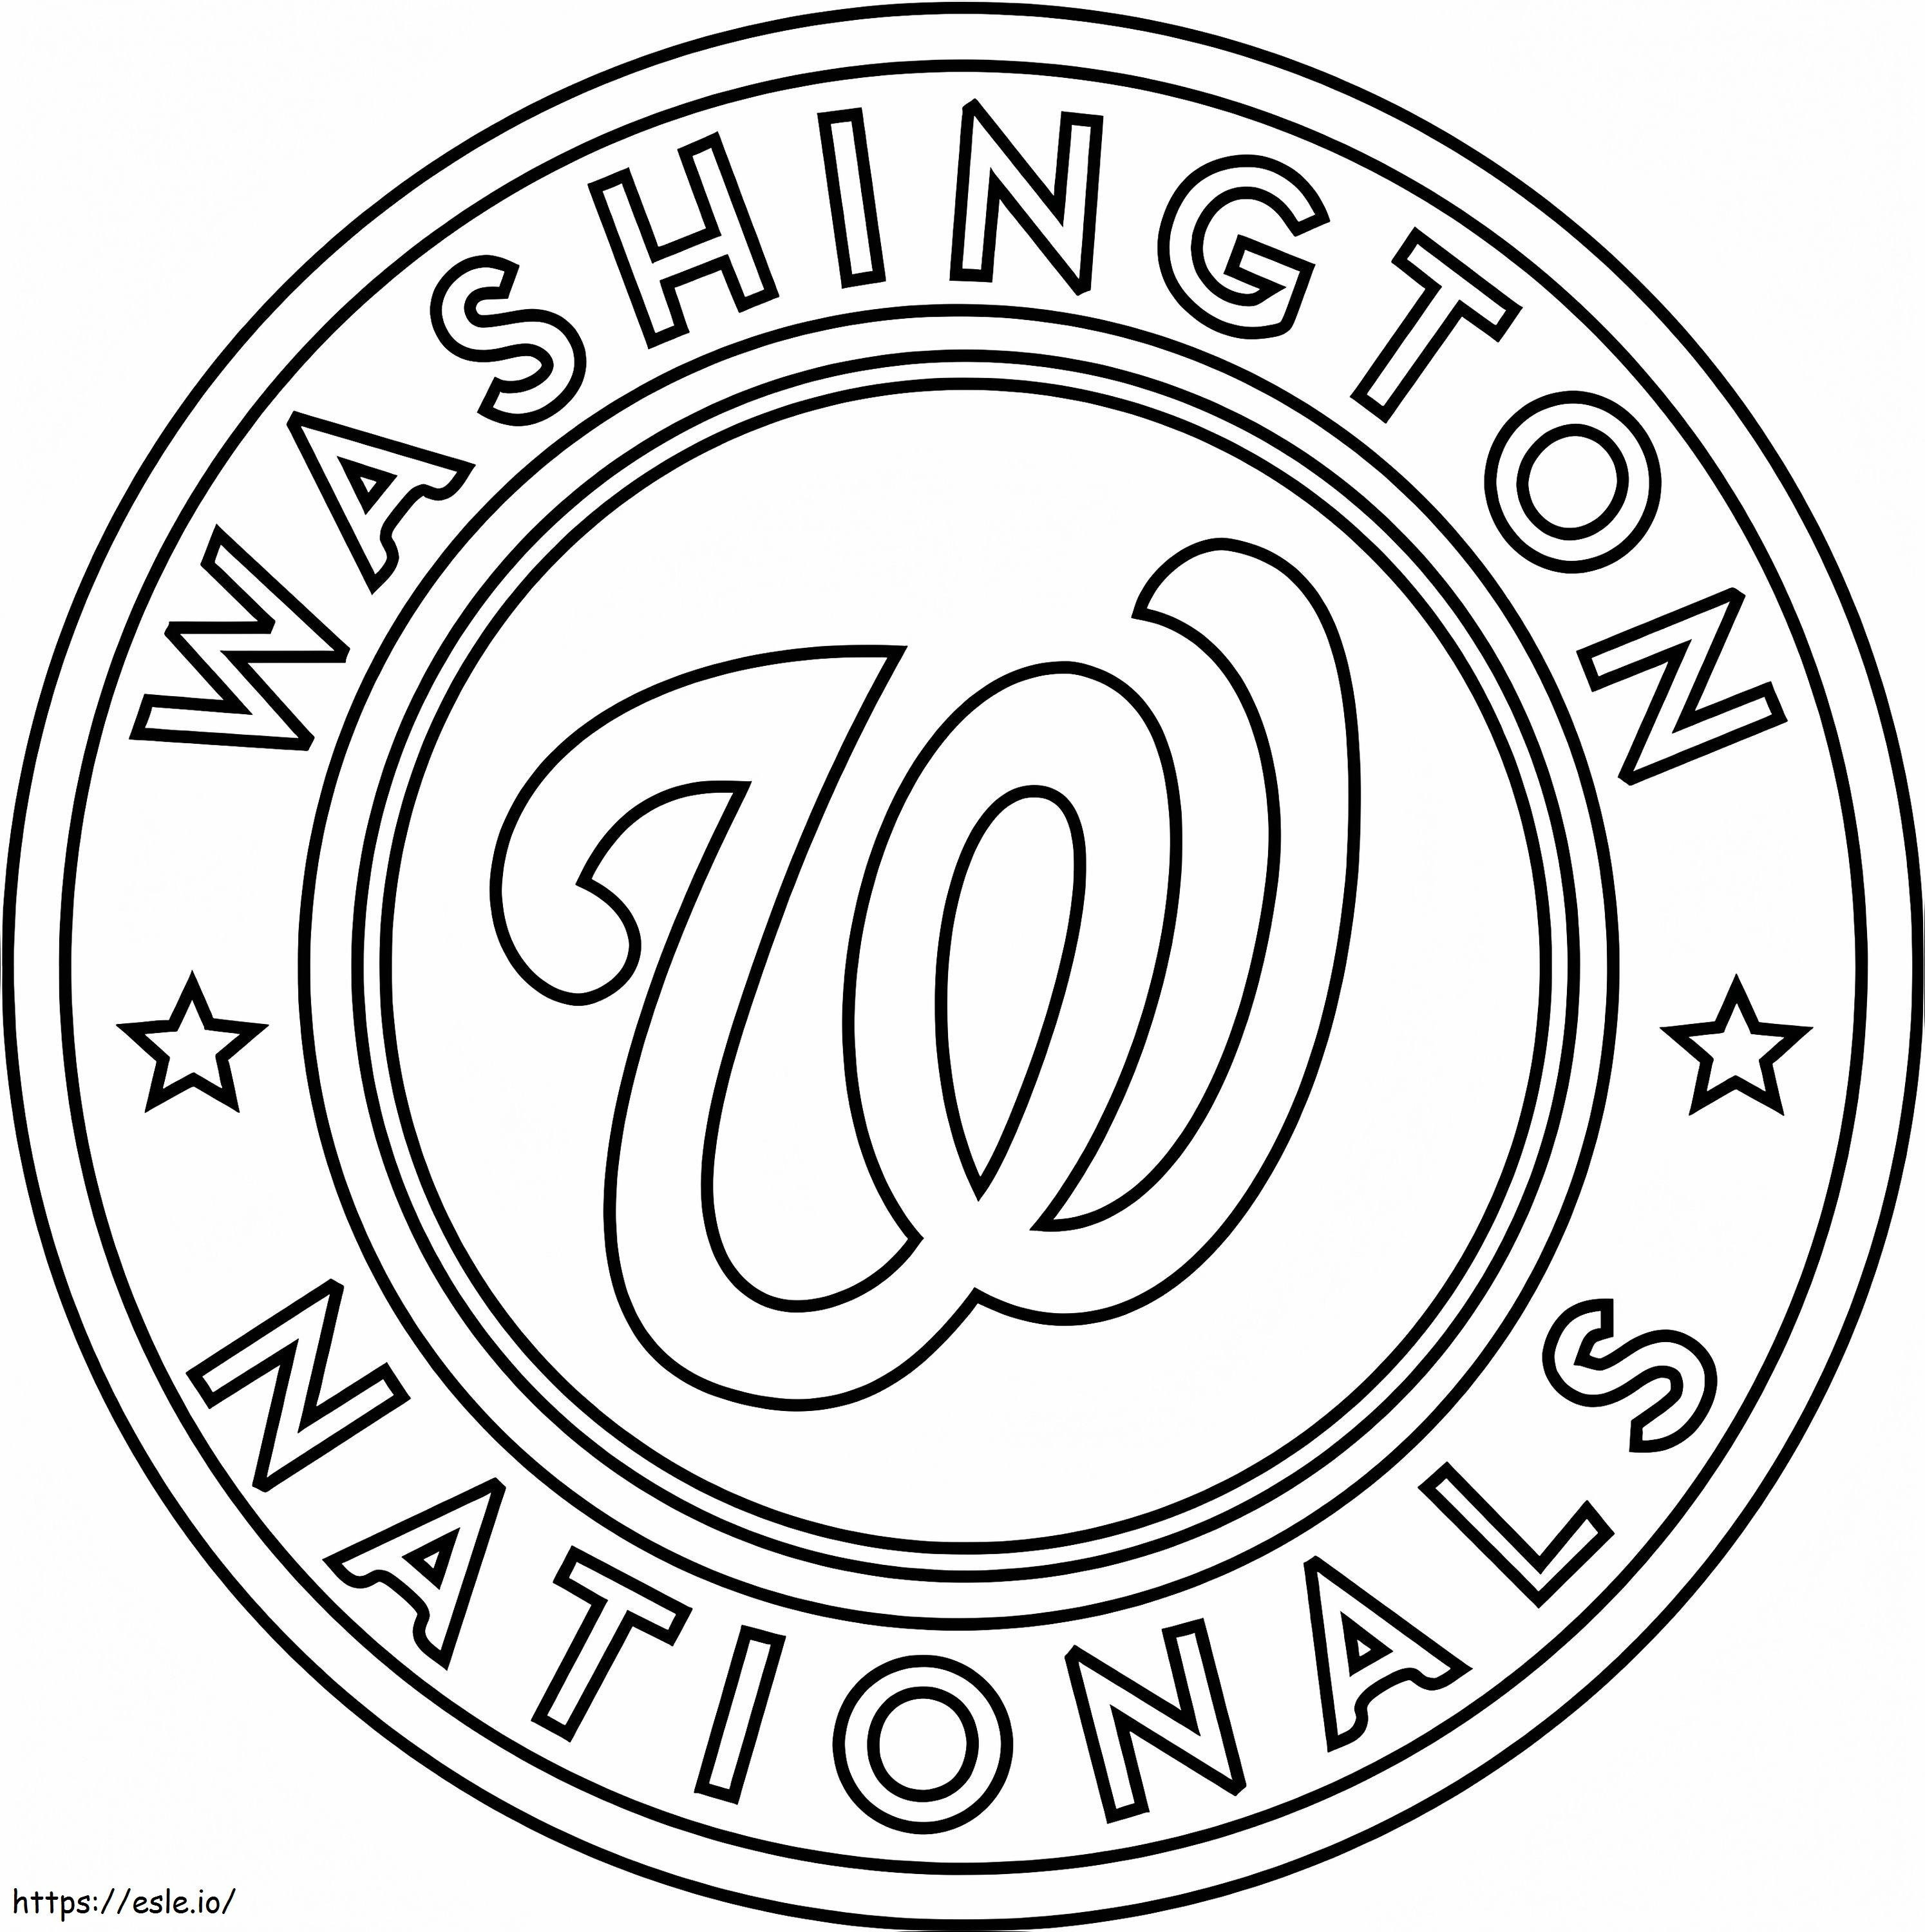 Washington Nationals logója kifestő